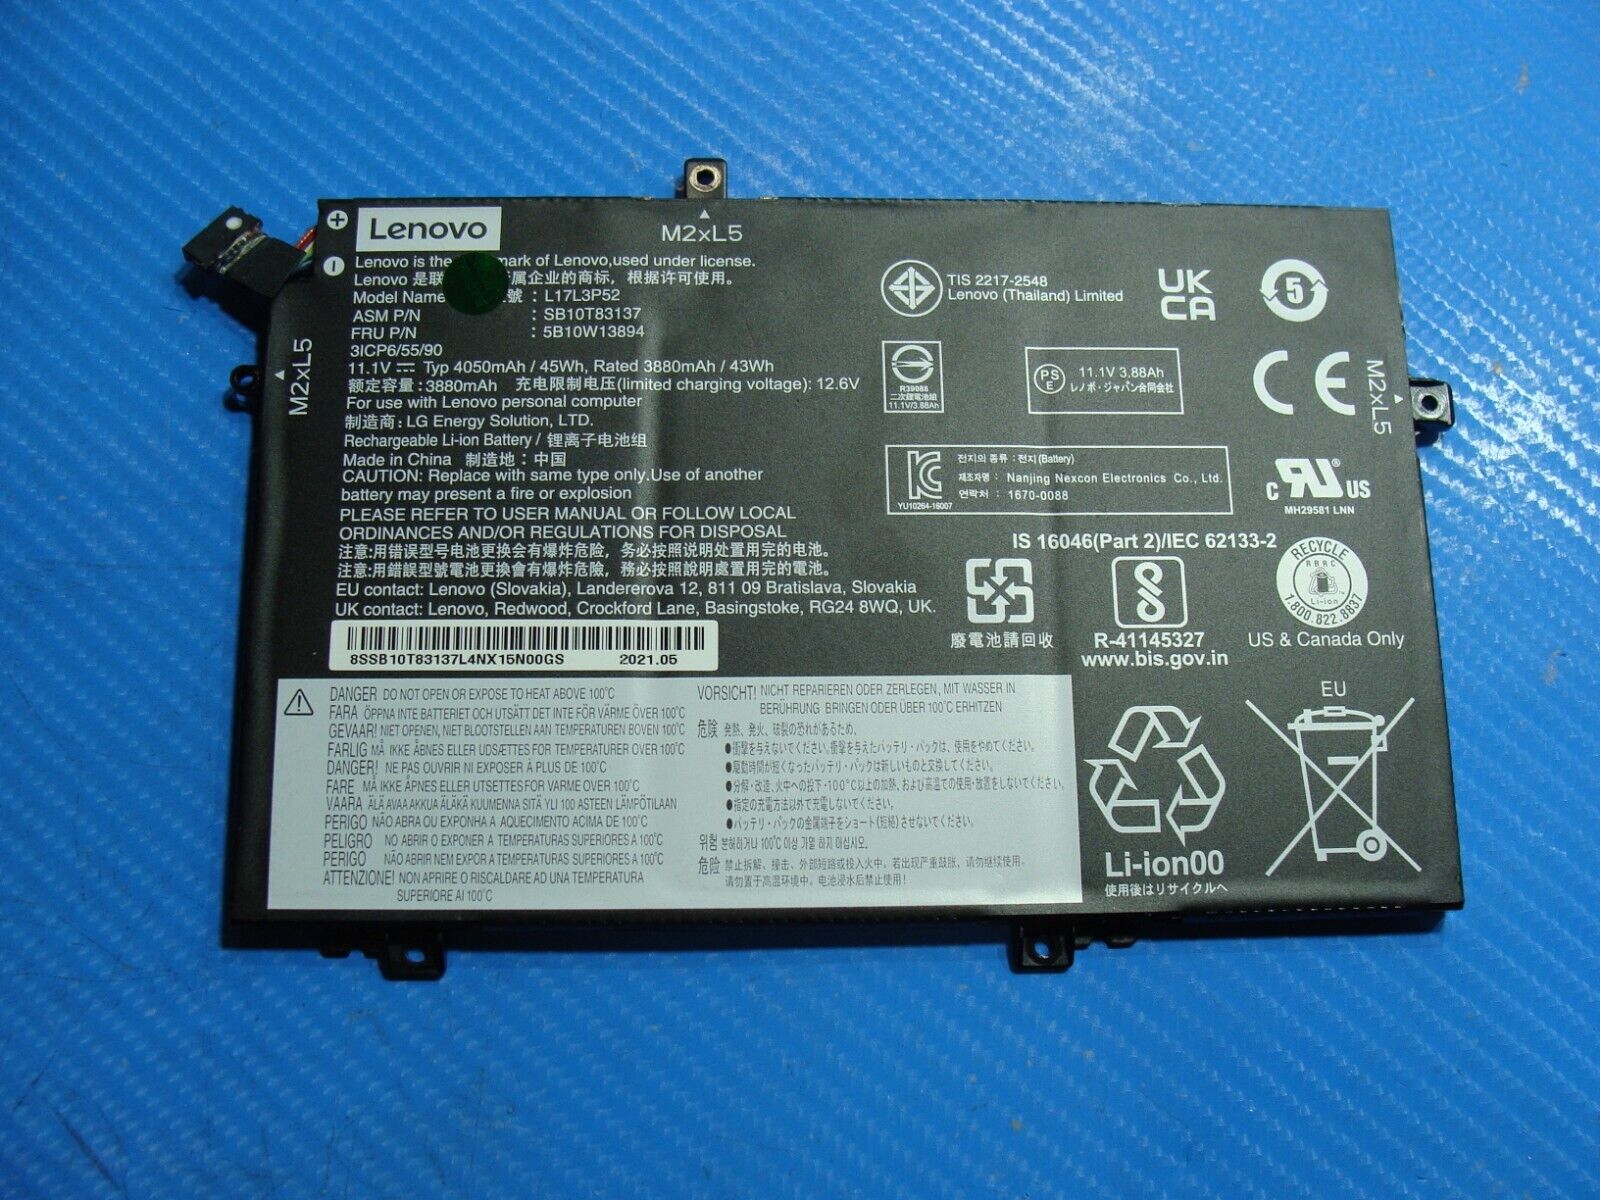 Lenovo ThinkPad L14 Gen 2 14